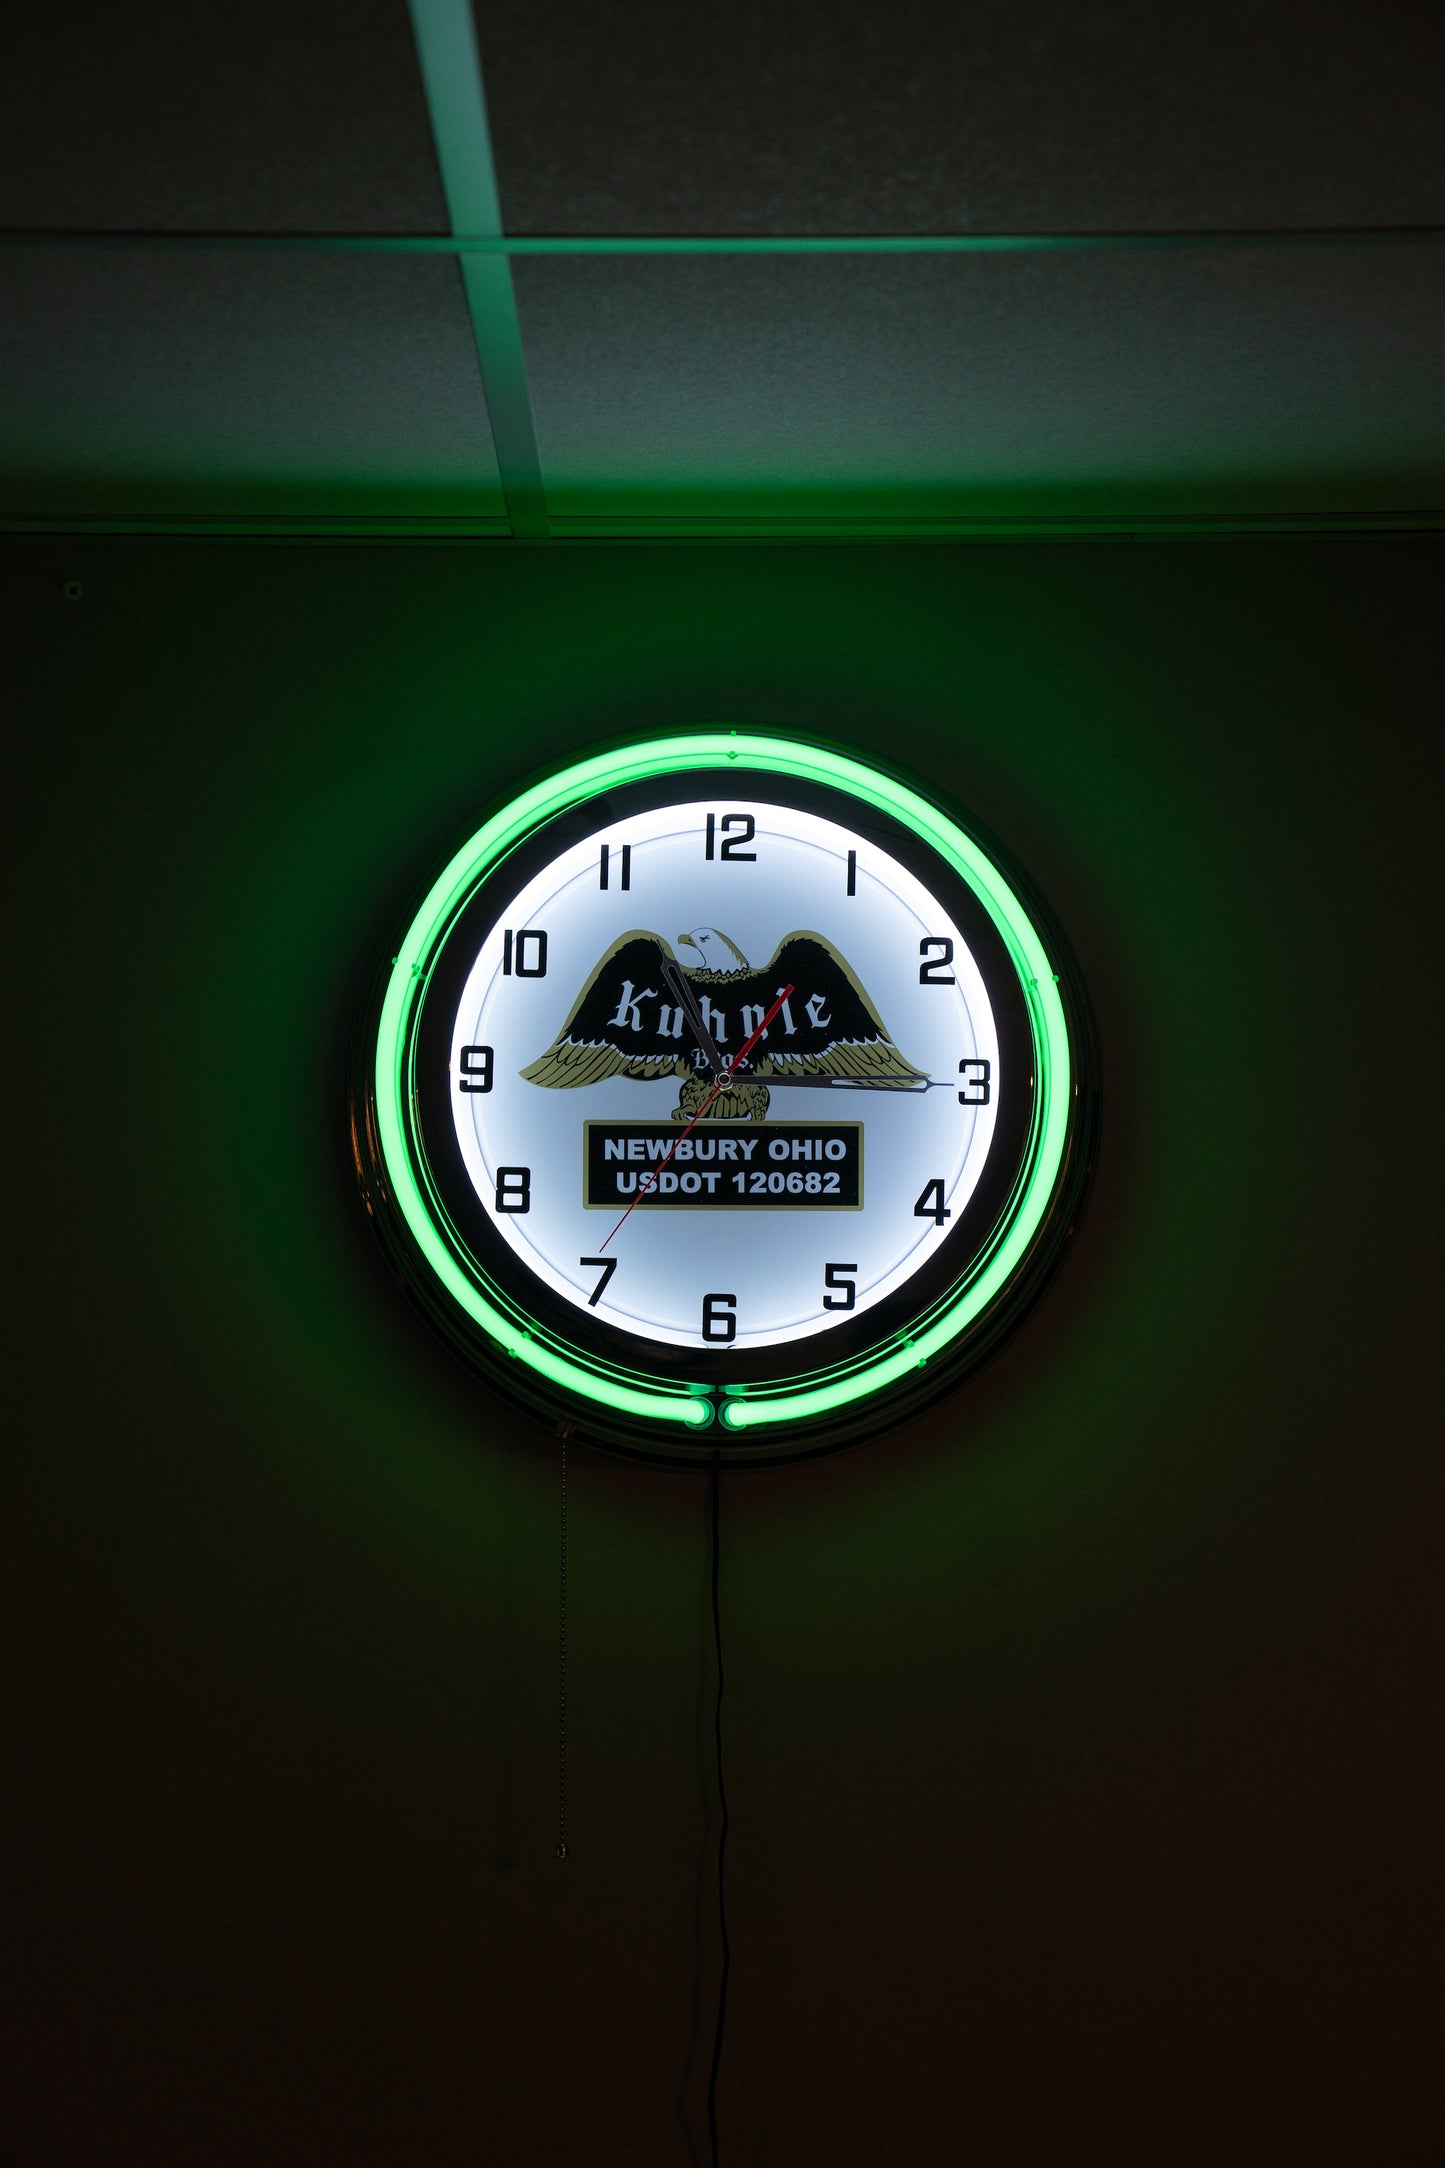 Kuhnle Brothers Logo Clock